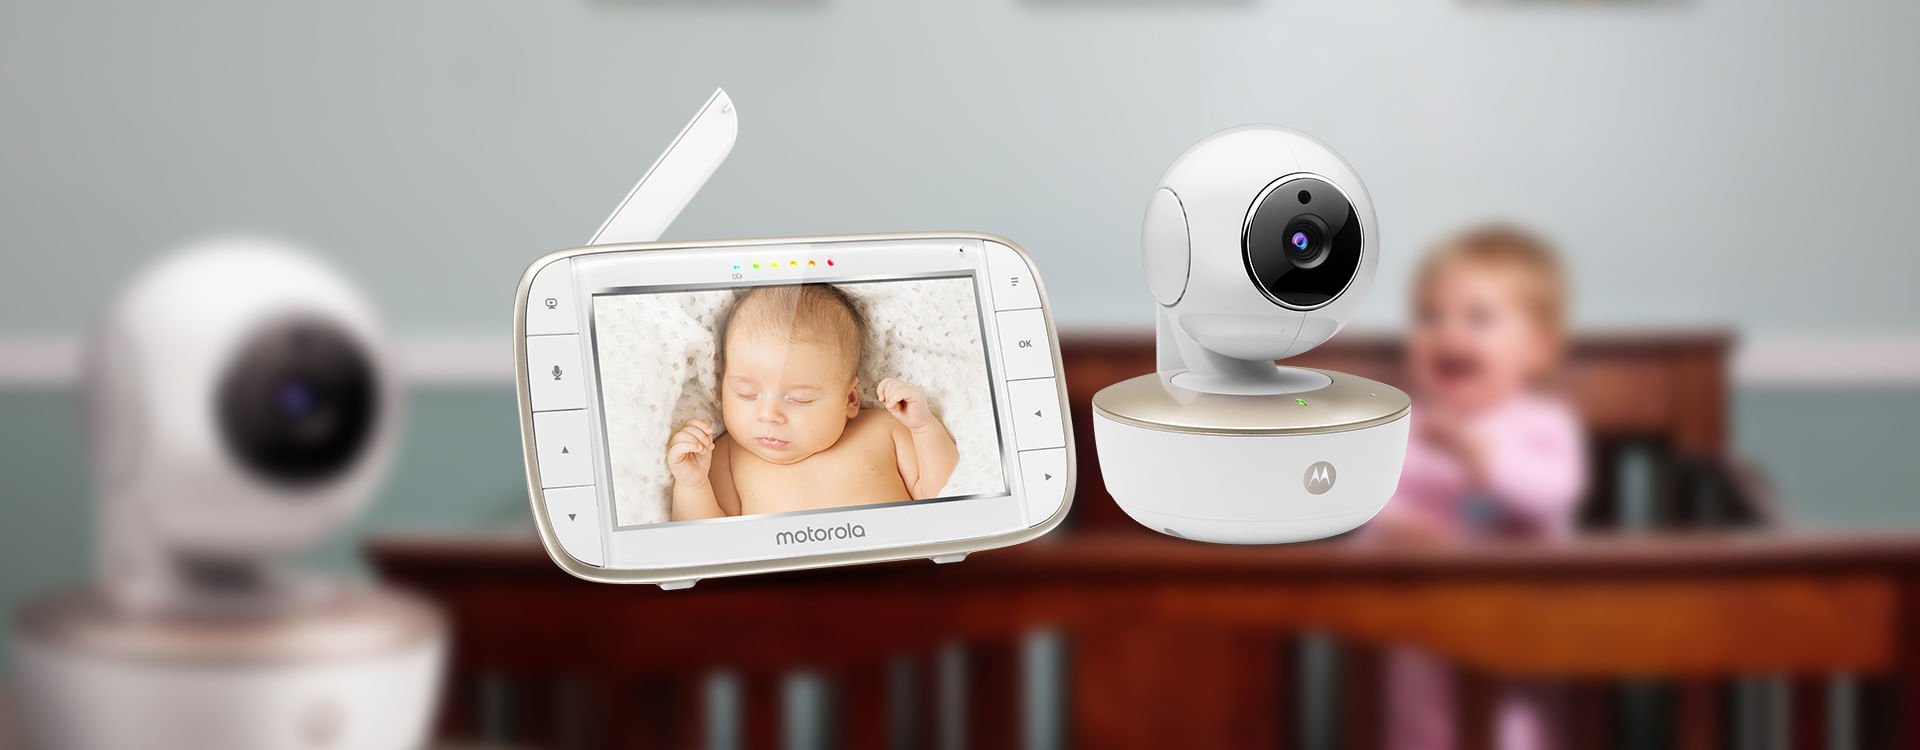 motorola wifi baby monitor mbp85connect